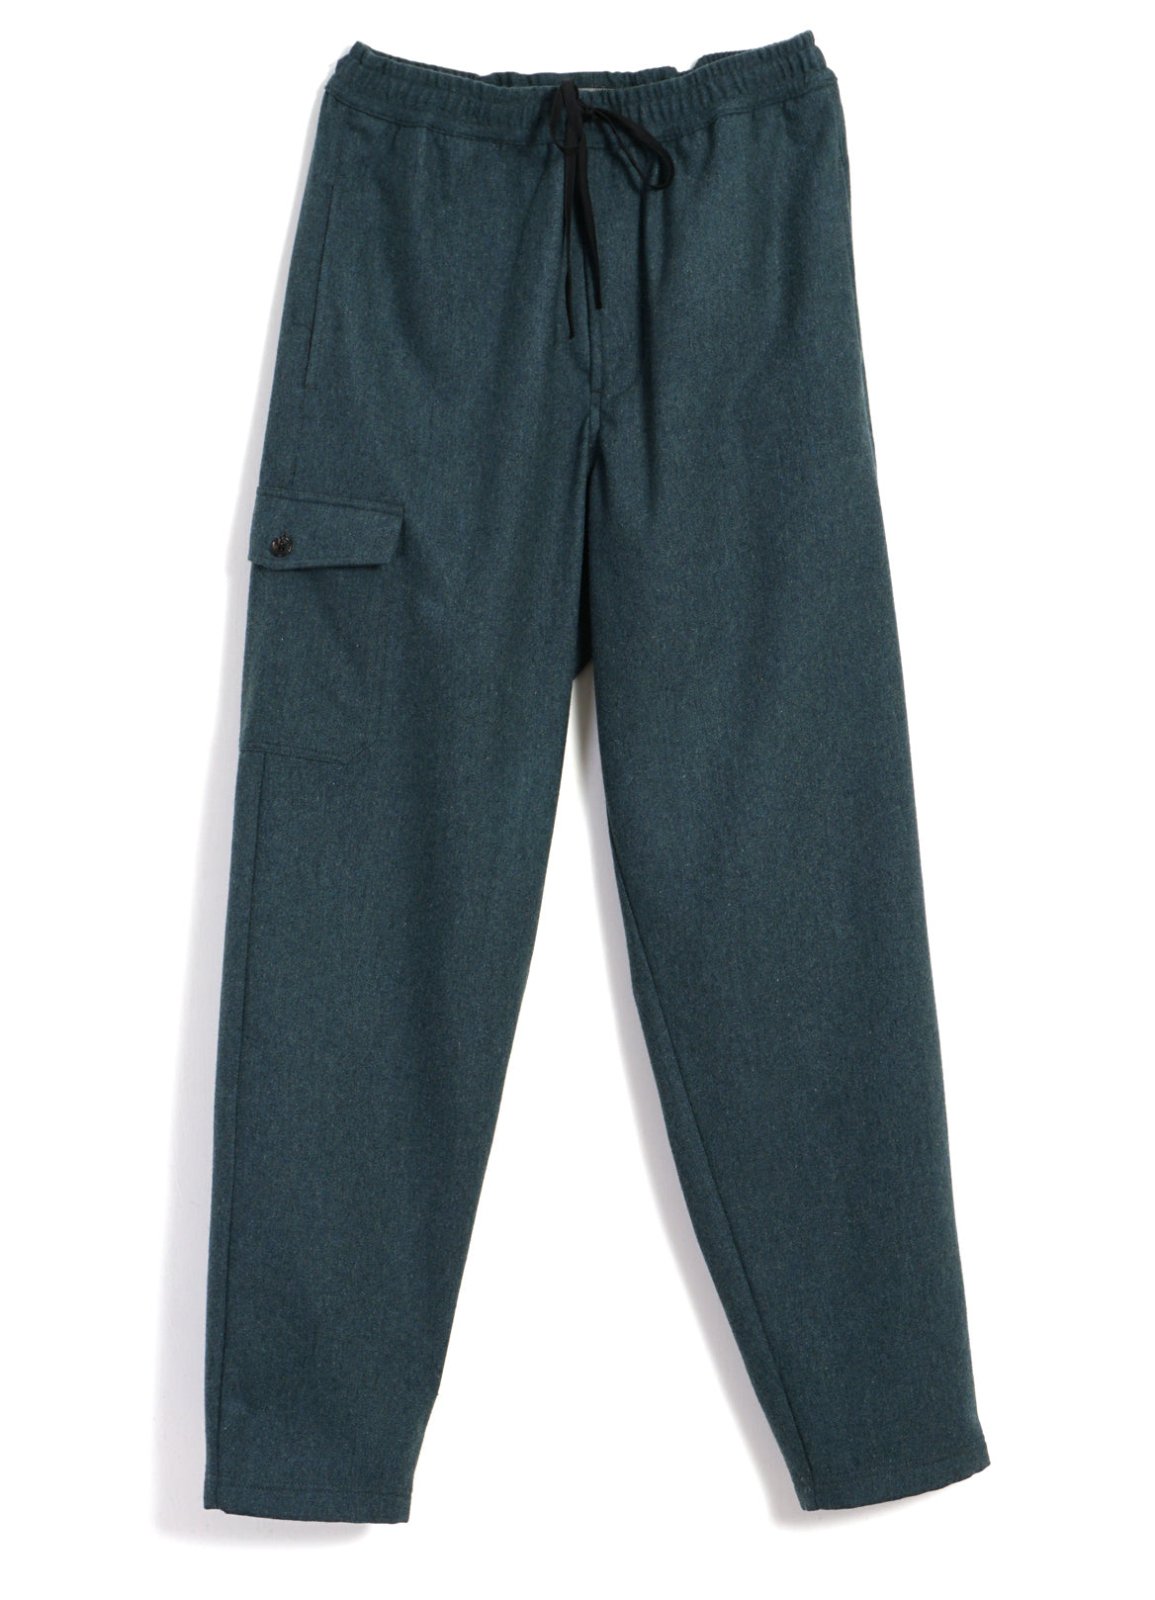 HANSEN GARMENTS - JIMMY | Casual Cargo Drawstring Pants | Moss Green - HANSEN Garments